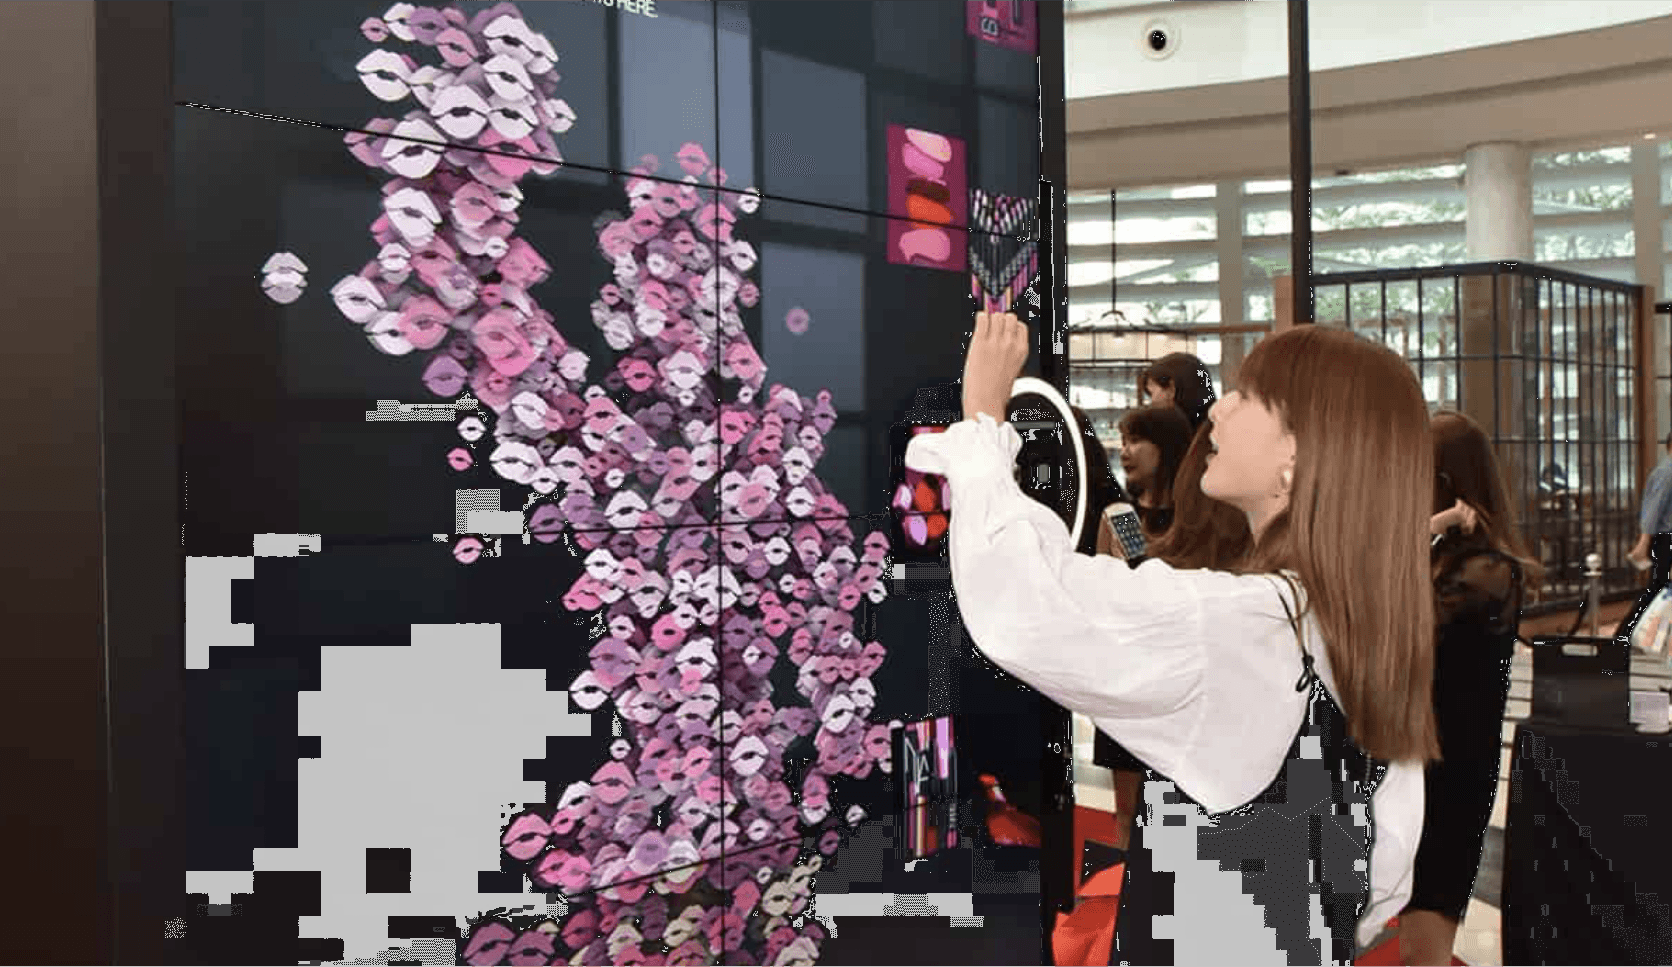 Virtual interactive wall for NARS mall installation